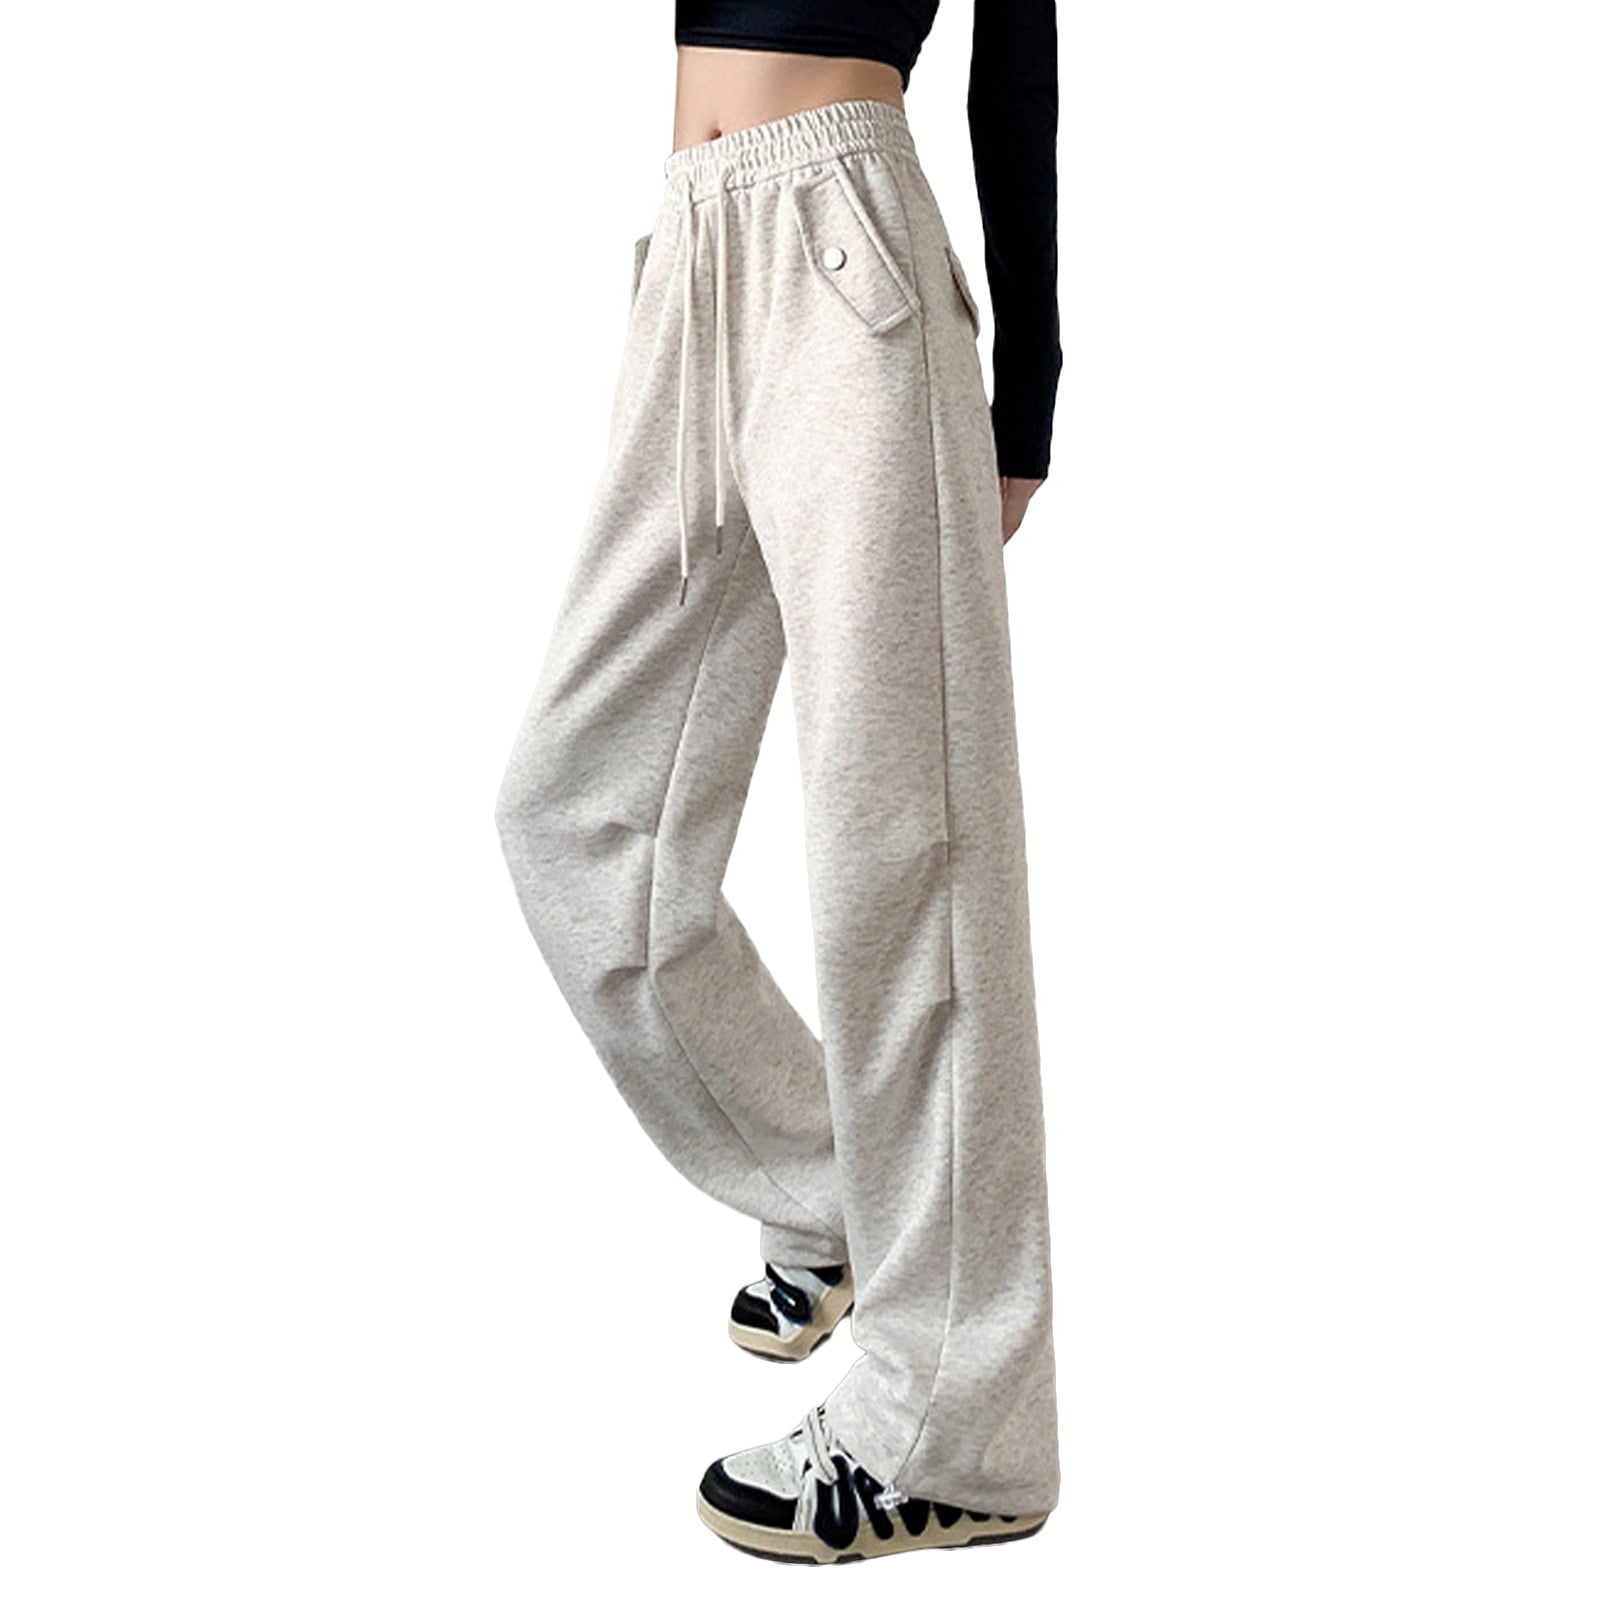 Riforla Women's Lined Cargo Trousers Warm Casual Trousers Sweatpants ...